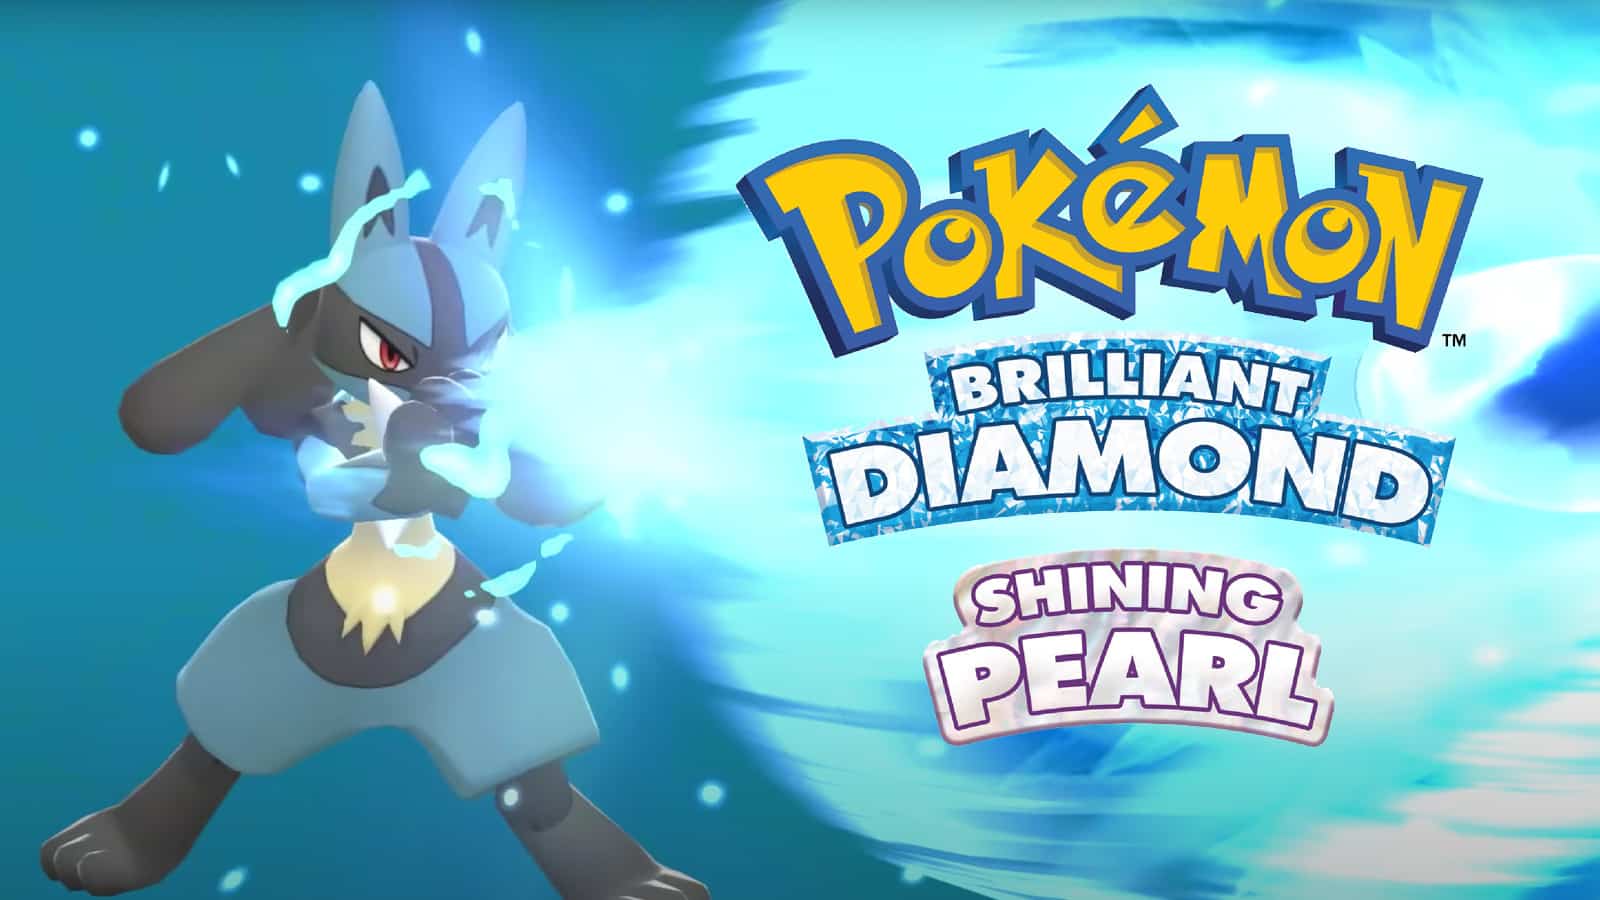 Pokemon Brilliant Diamond & Shining Pearl will add another Pokemon